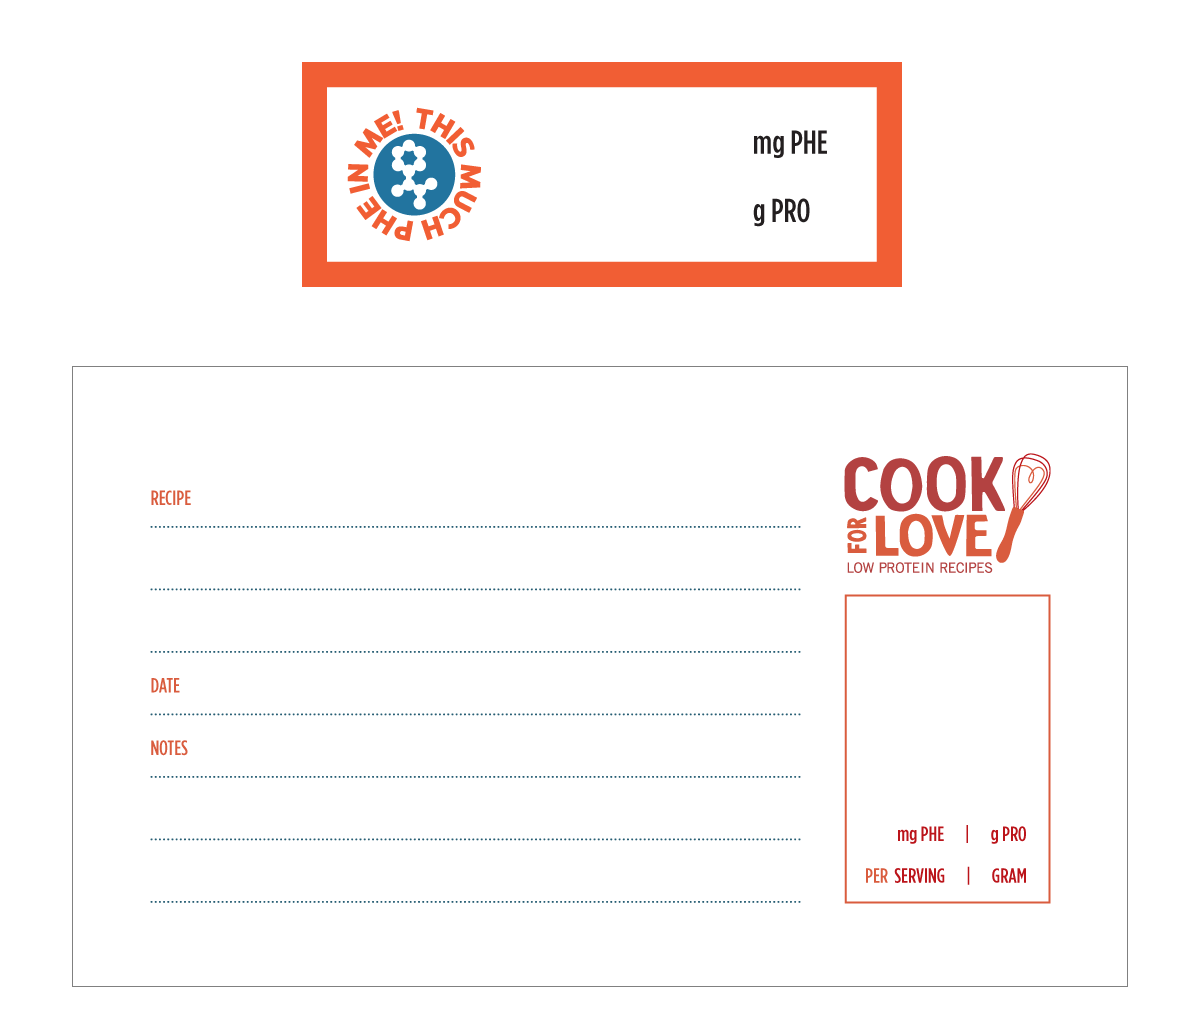 Cook for Love Label Set